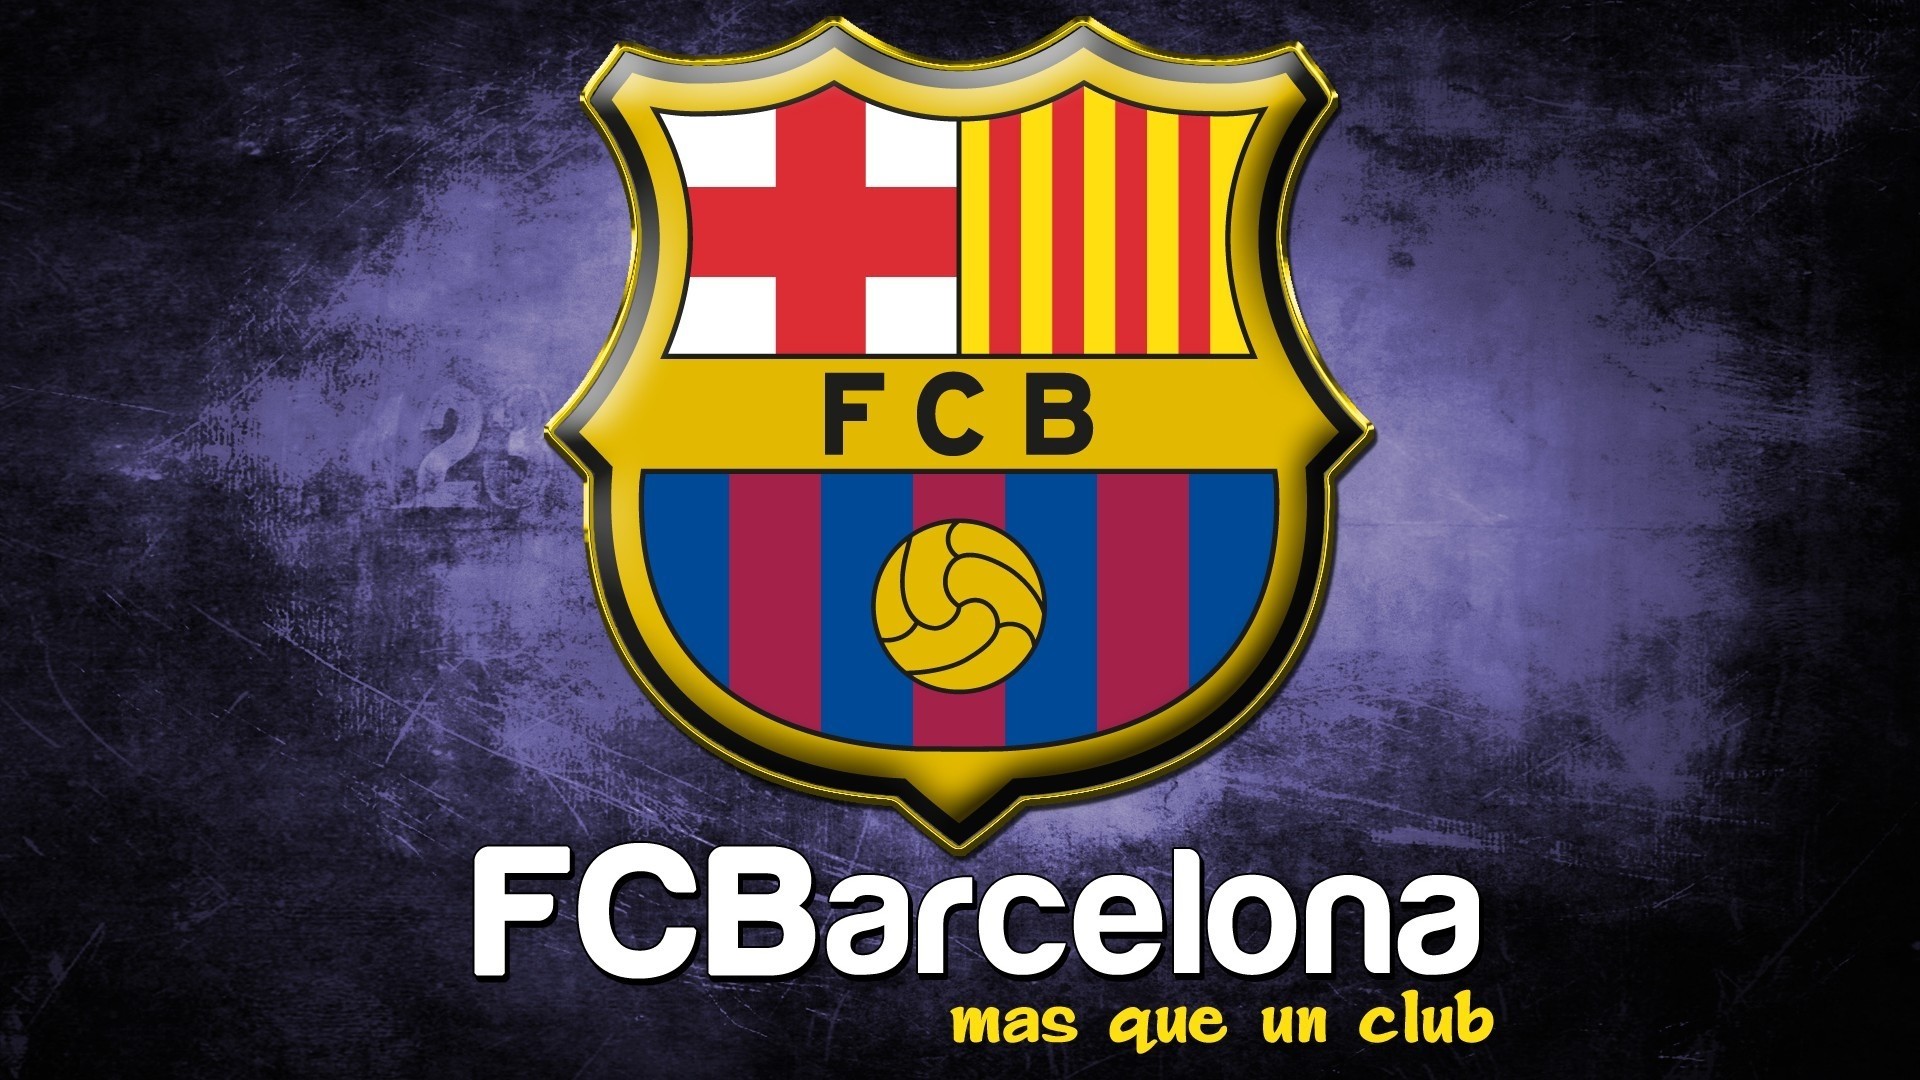 Barcelona Logo Wallpaper - PixelsTalk.Net